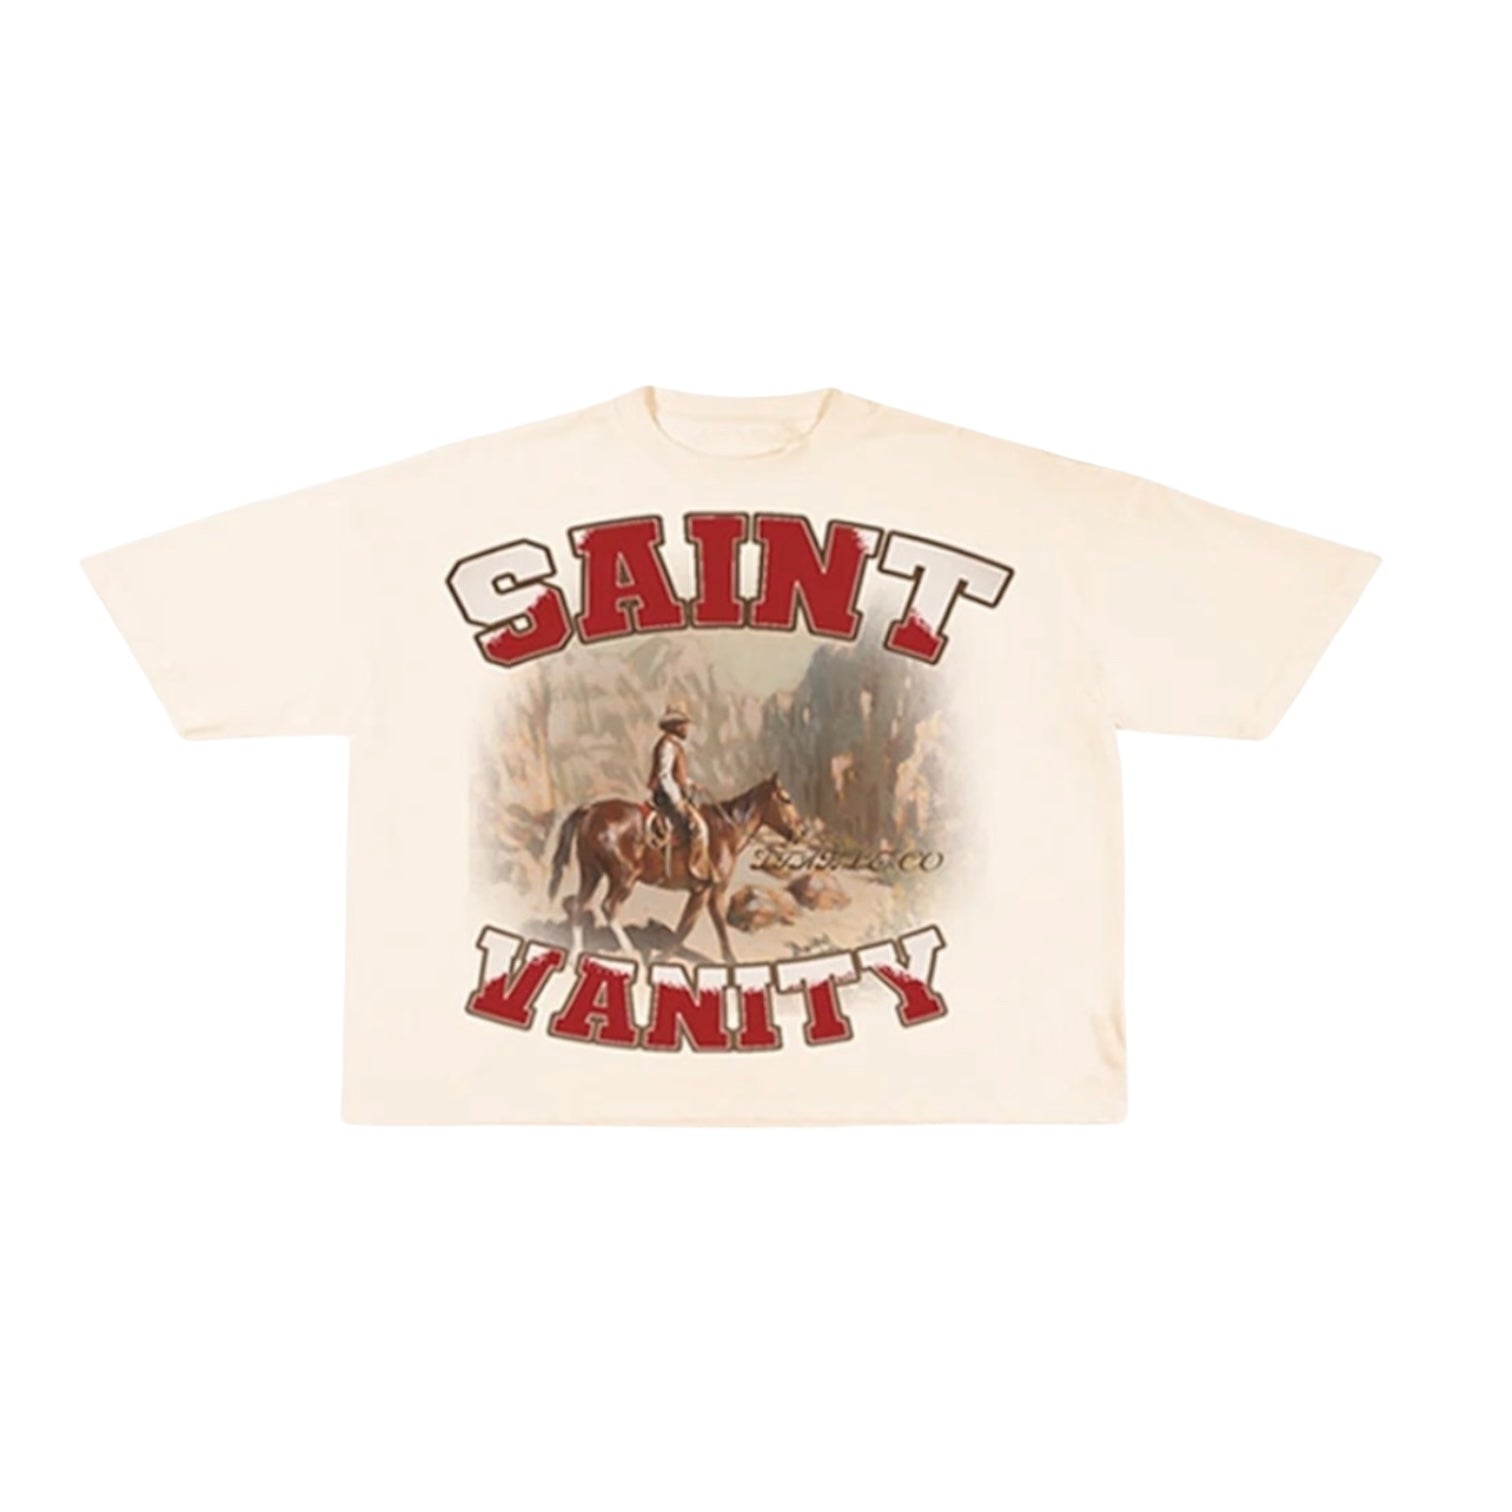 Saint Vanity Horses T-Shirt Cream